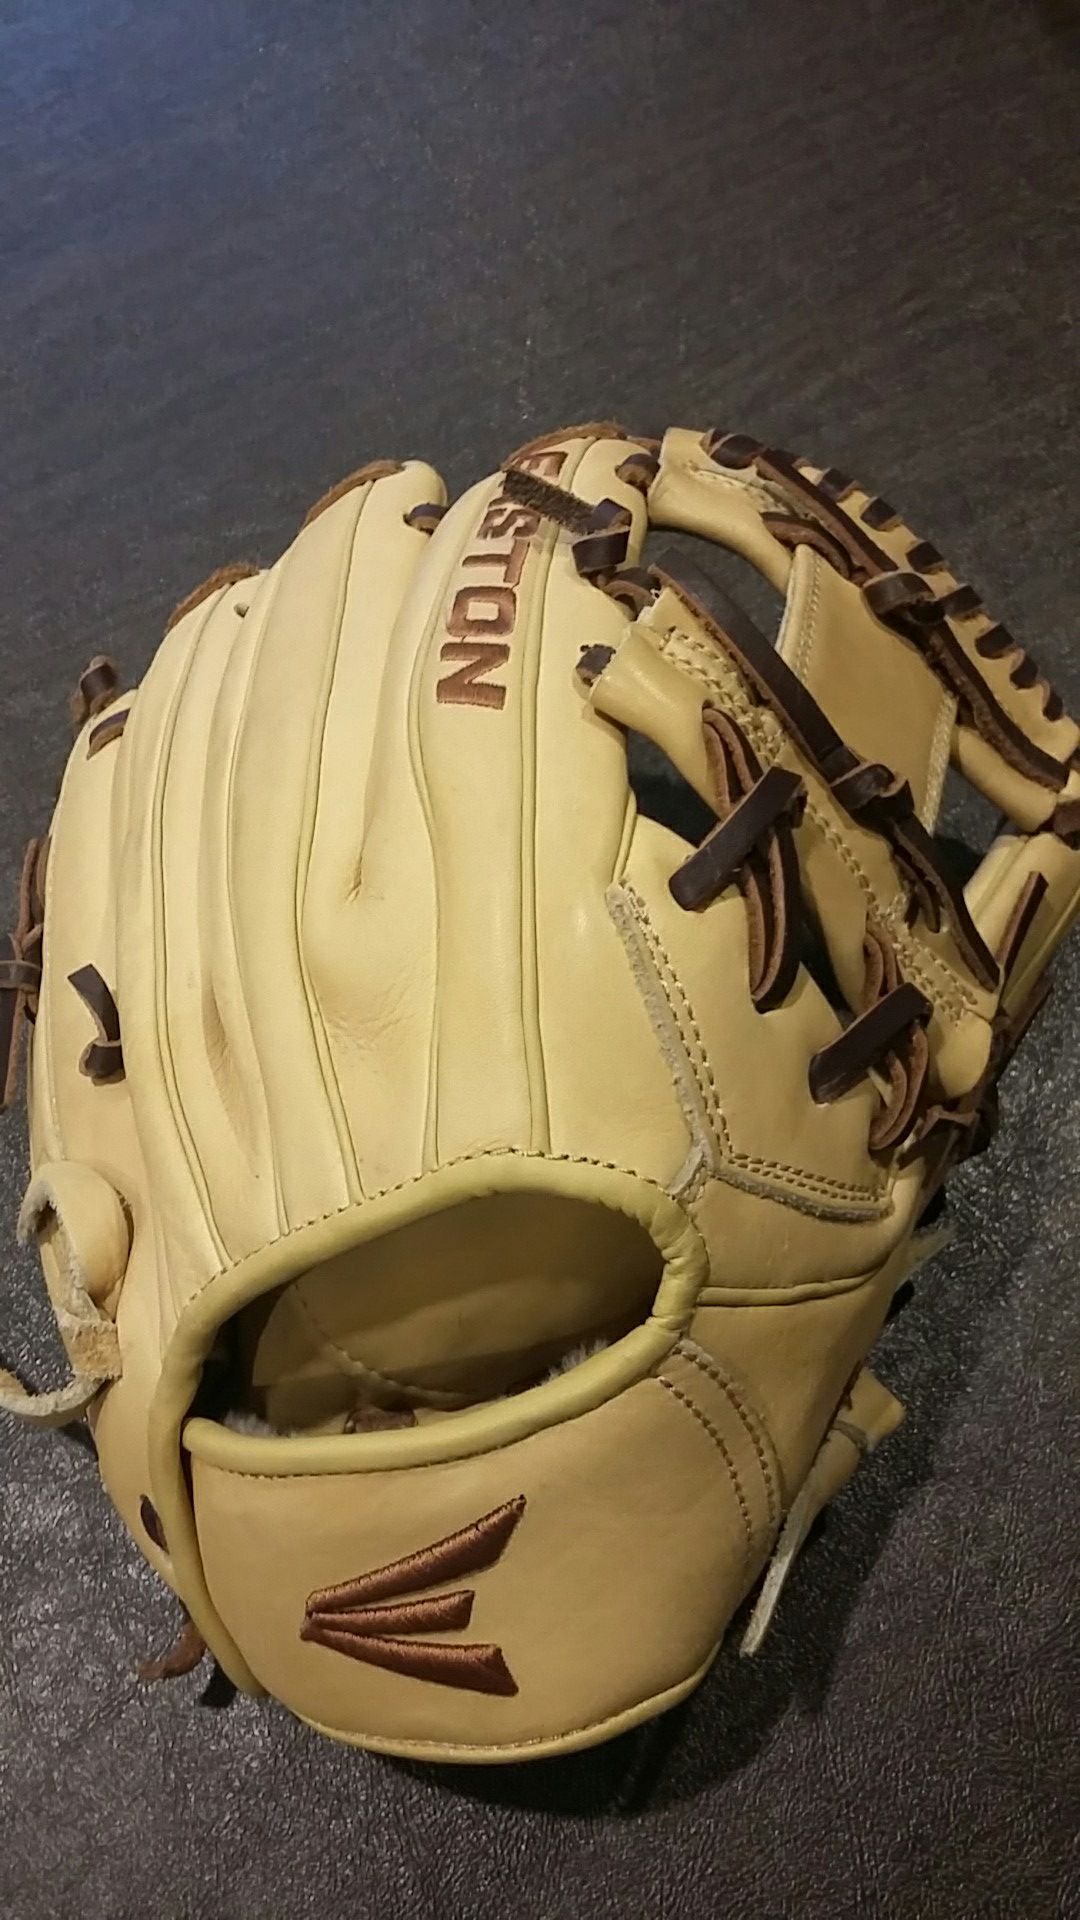 Easton youth baseball glove